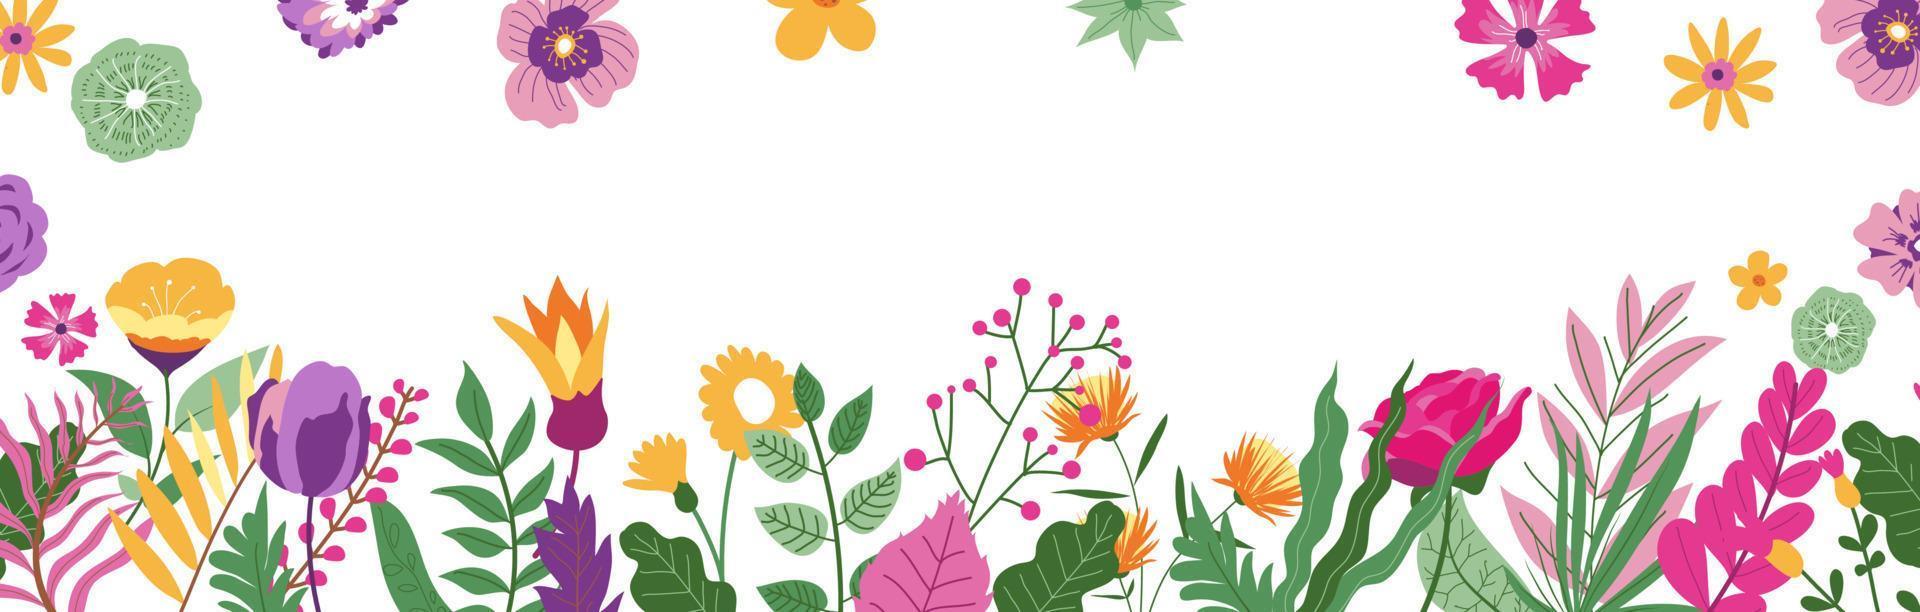 florecimiento de verano o primavera, pancarta o marco floral vector